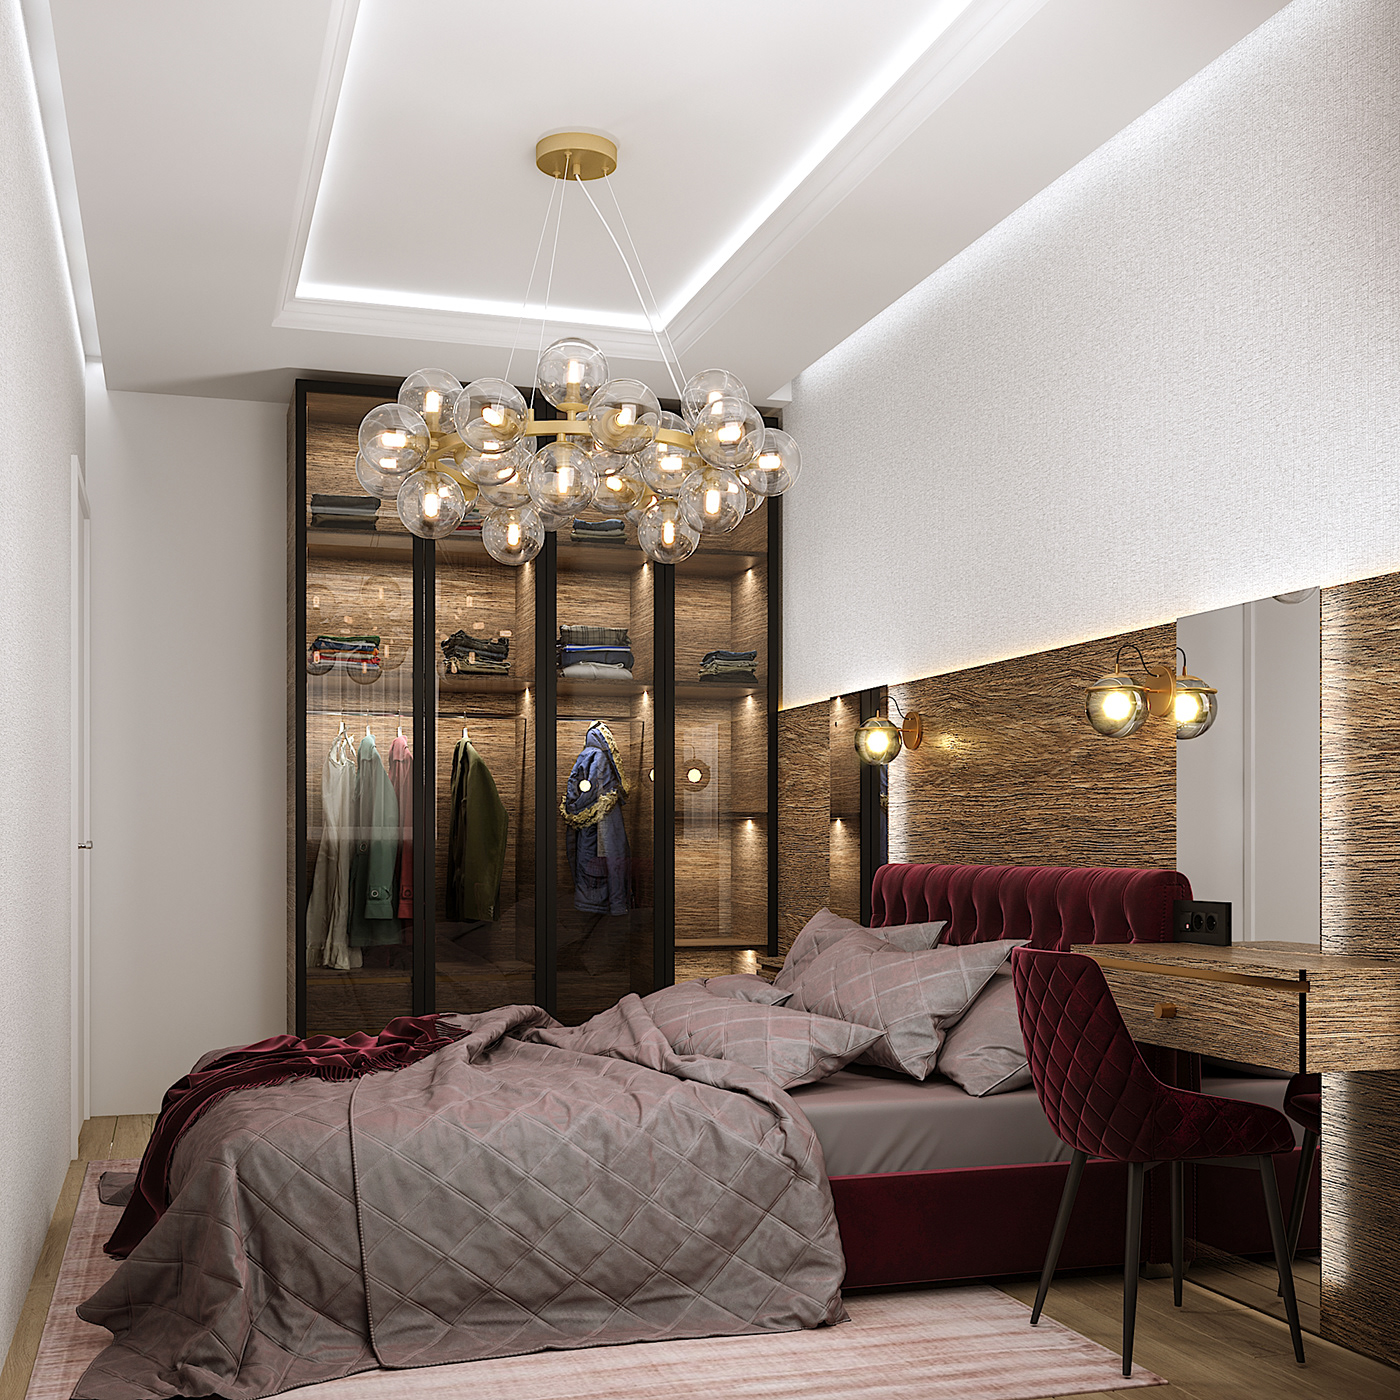 3ds max architecture archviz CGI corona indoor interior design  Render visualization